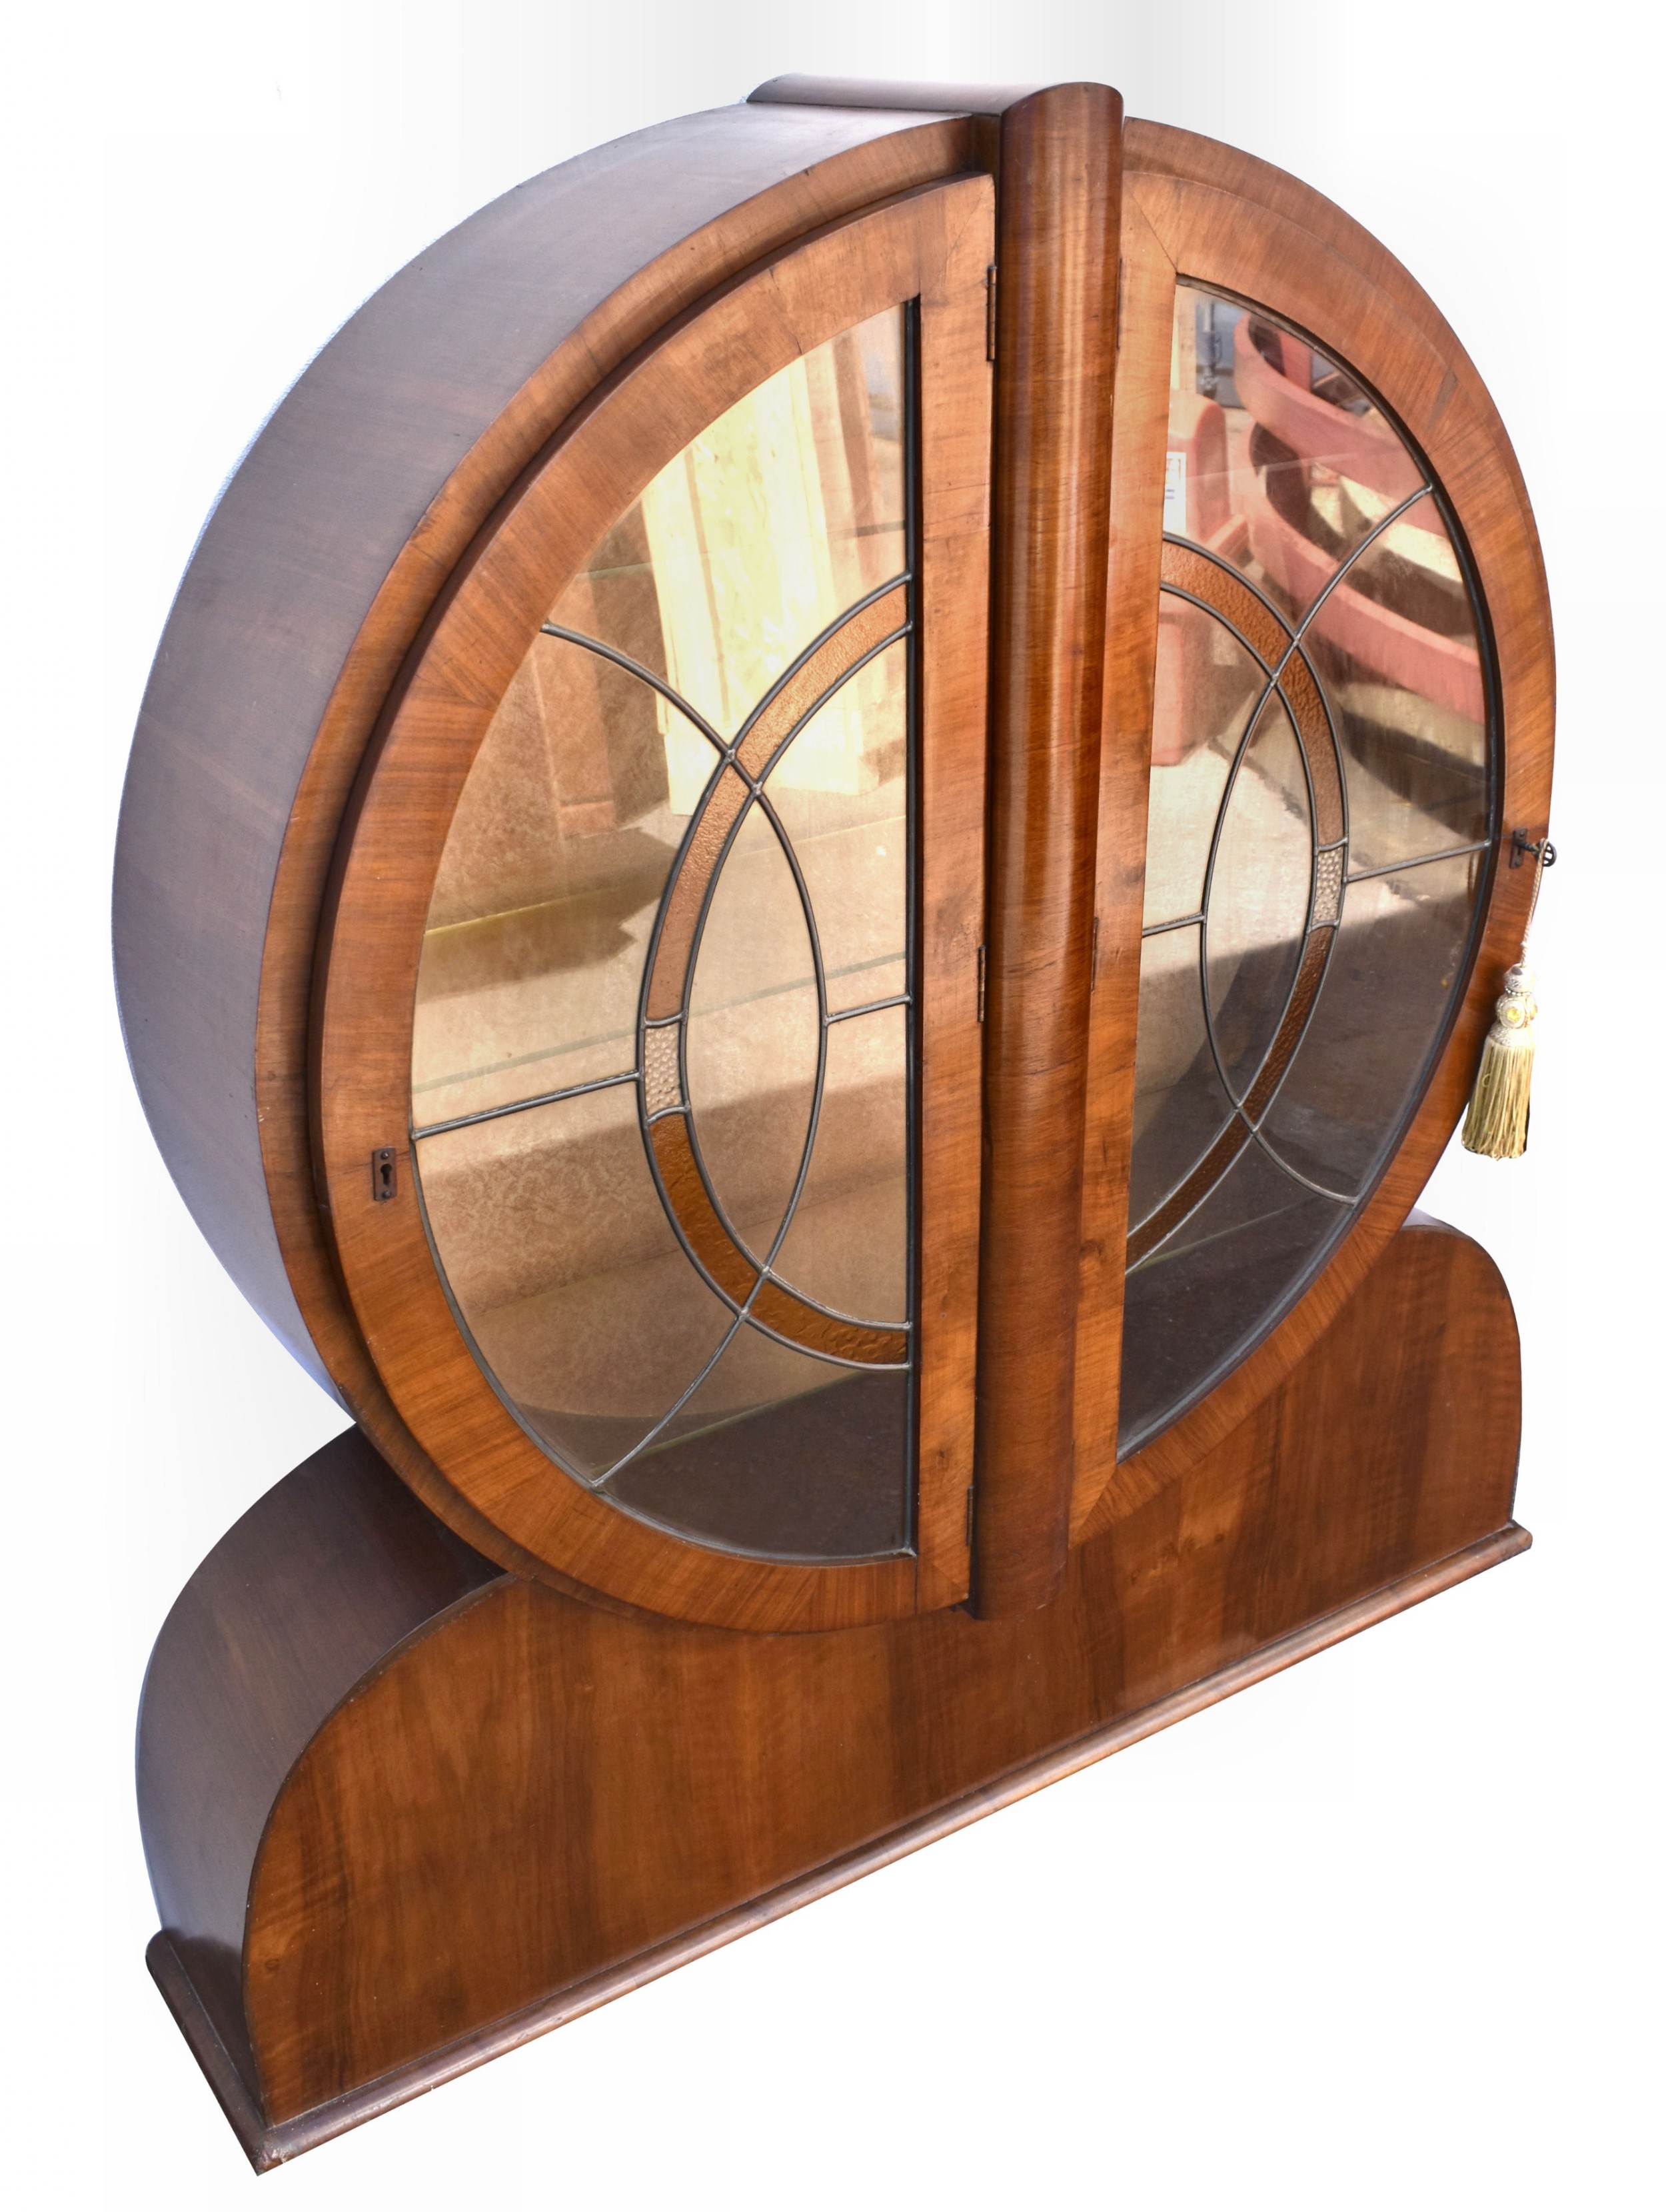 Verglaste Vitrine mit runden Türen im Art Deco Stil